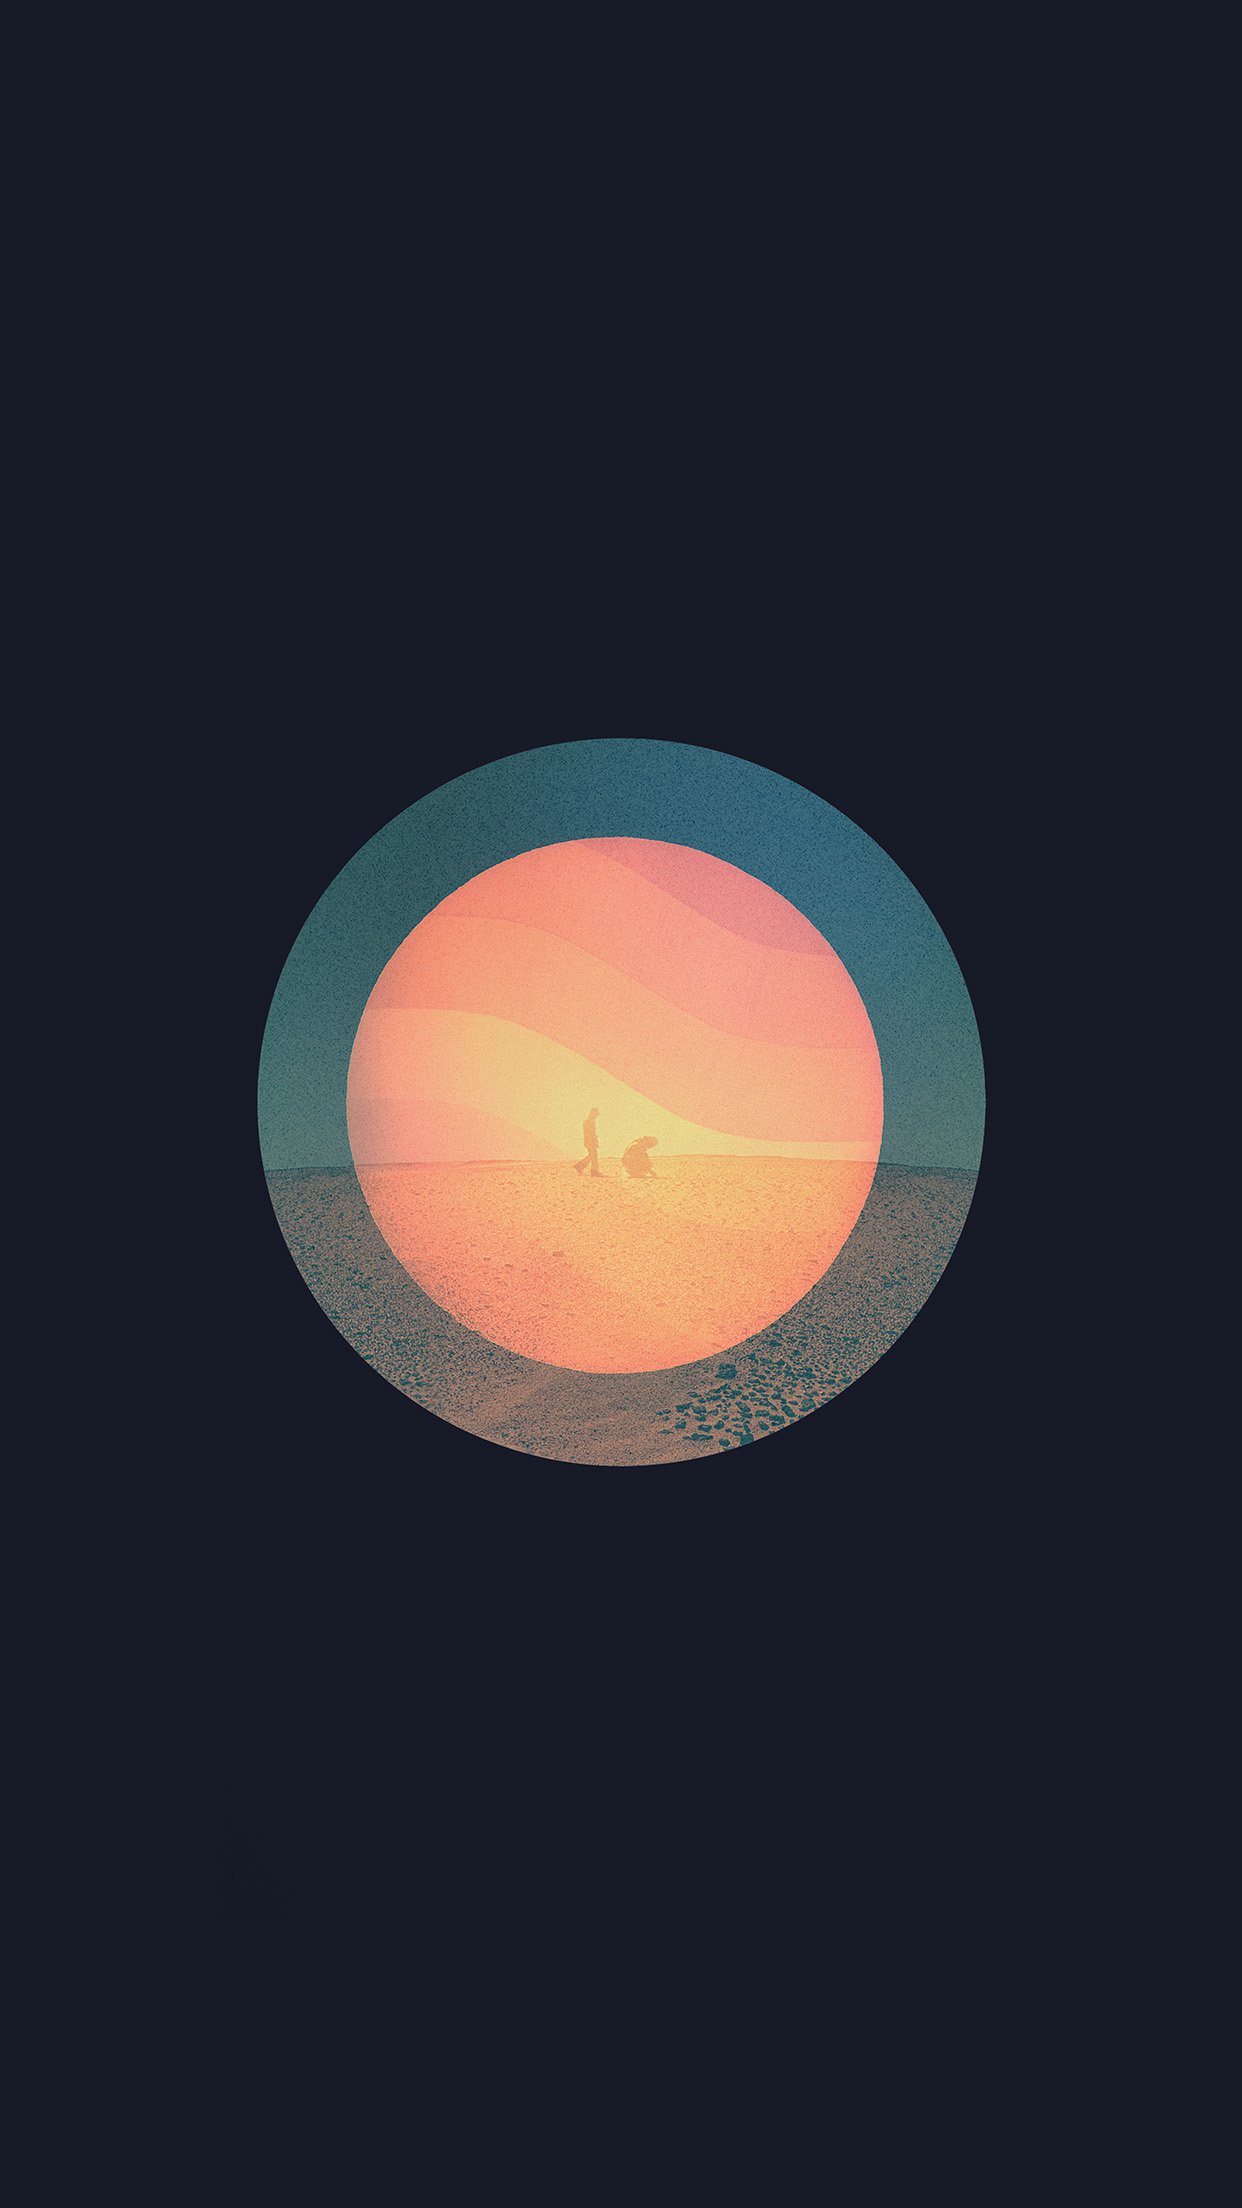 hd musik wallpaper für android,orange,himmel,kreis,atmosphäre,illustration